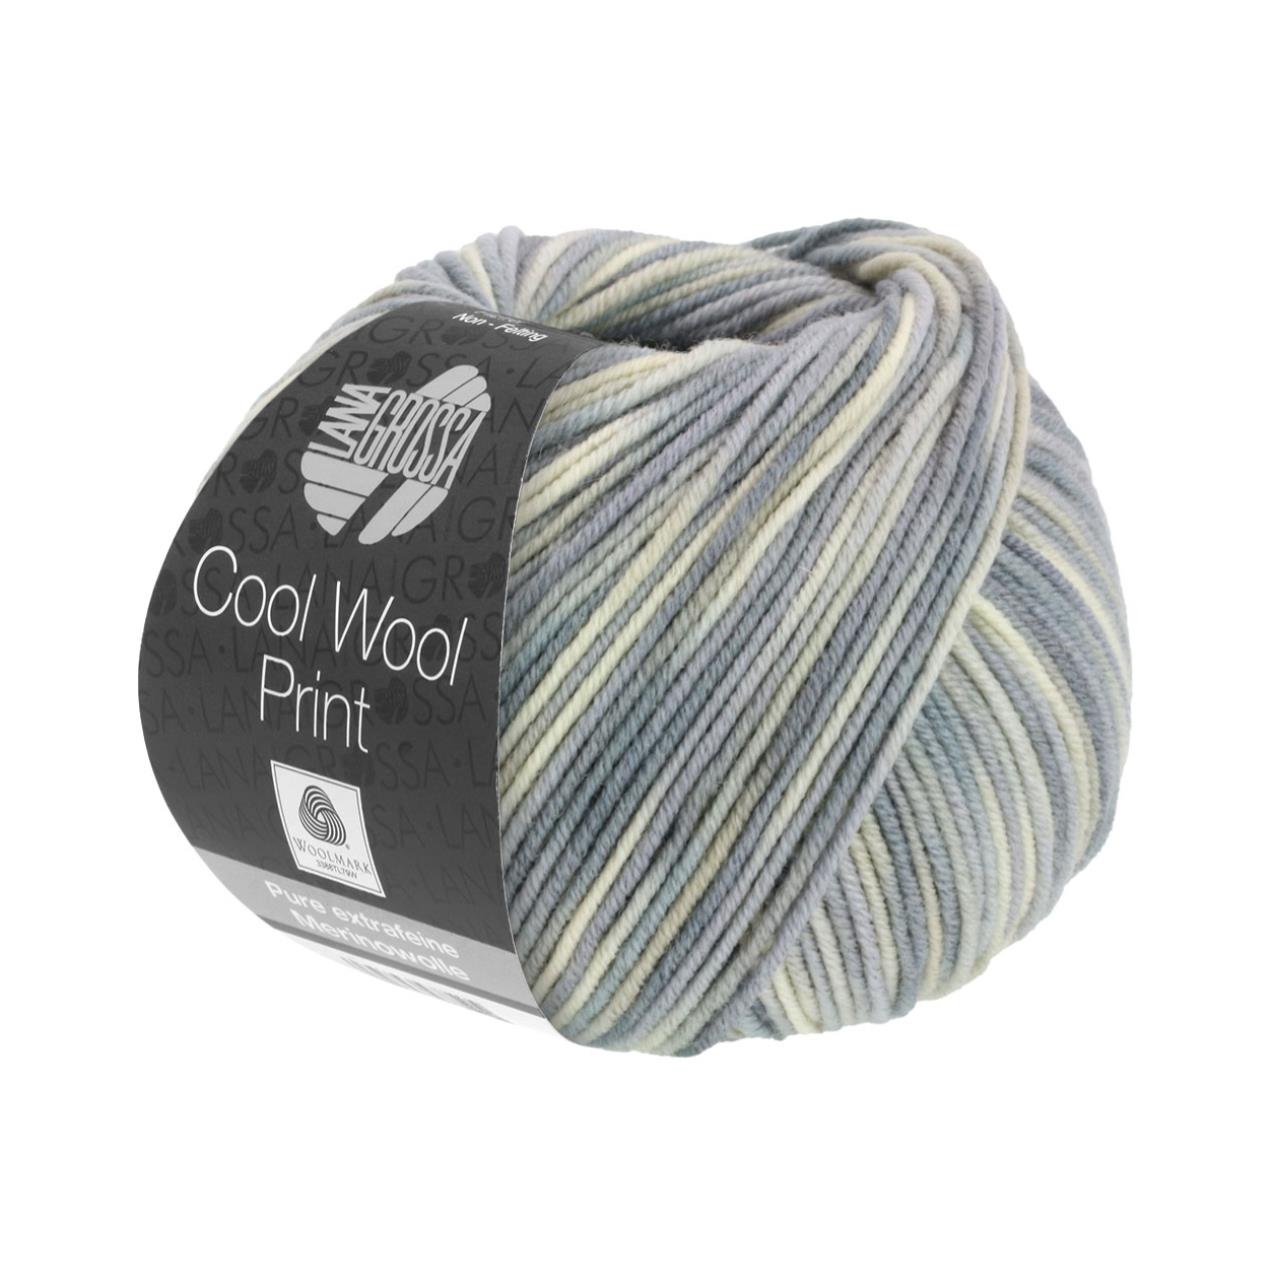 Cool Wool Print 829 Rohweiß/Silber-/Hellgrau/Grau